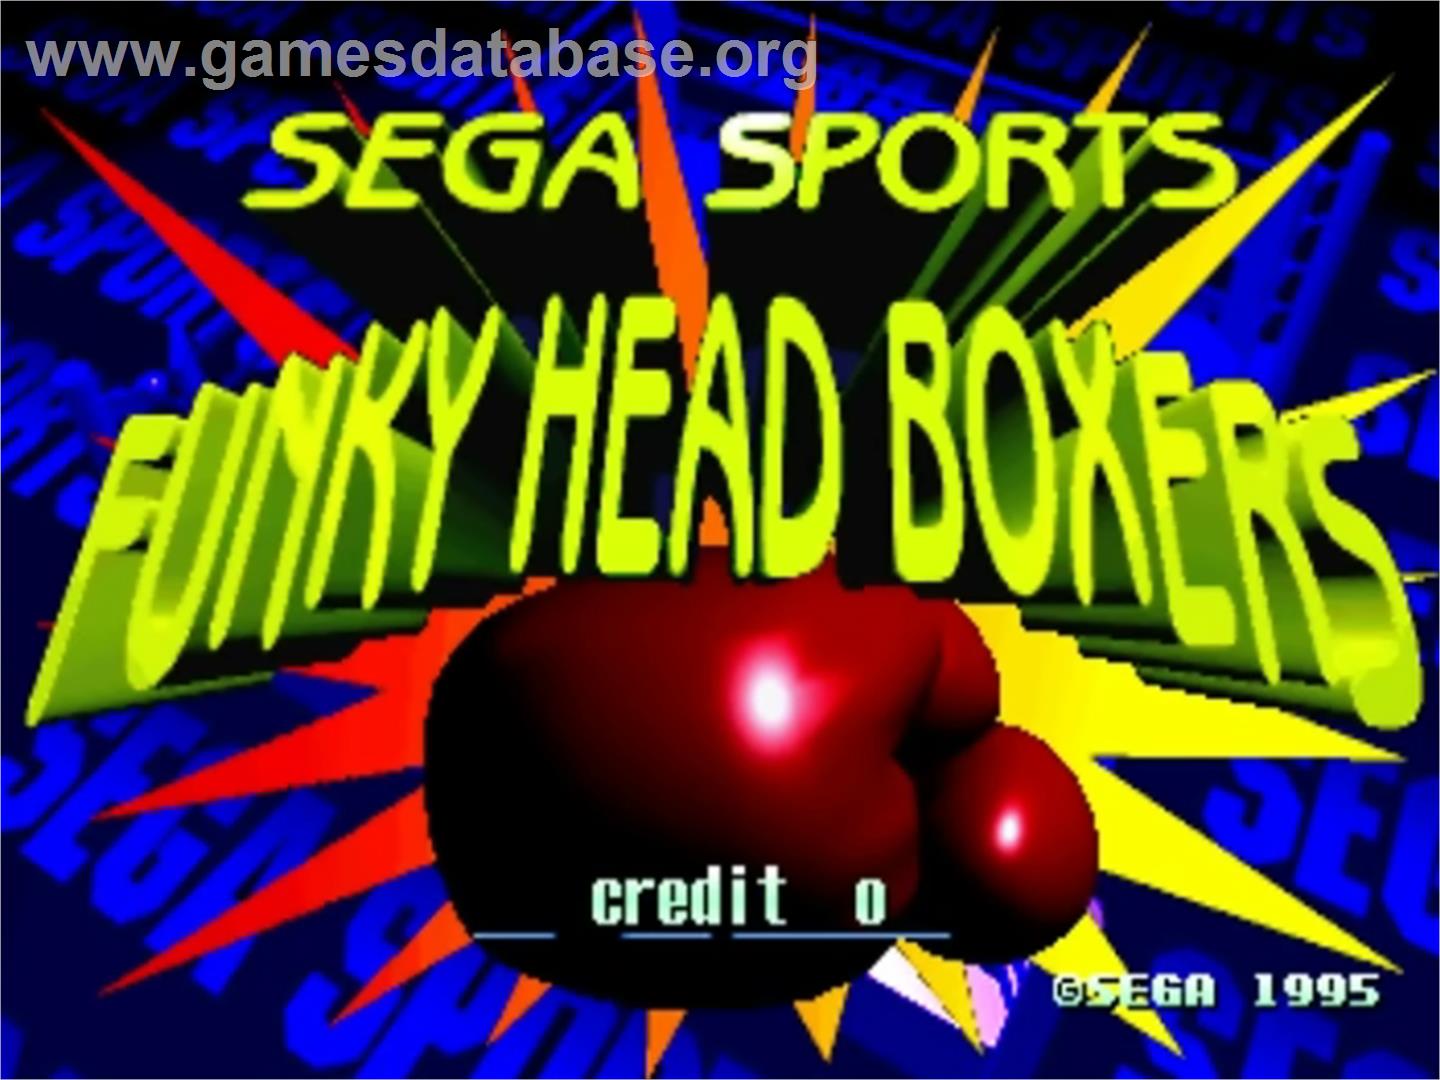 Funky Head Boxers - Sega ST-V - Artwork - Title Screen